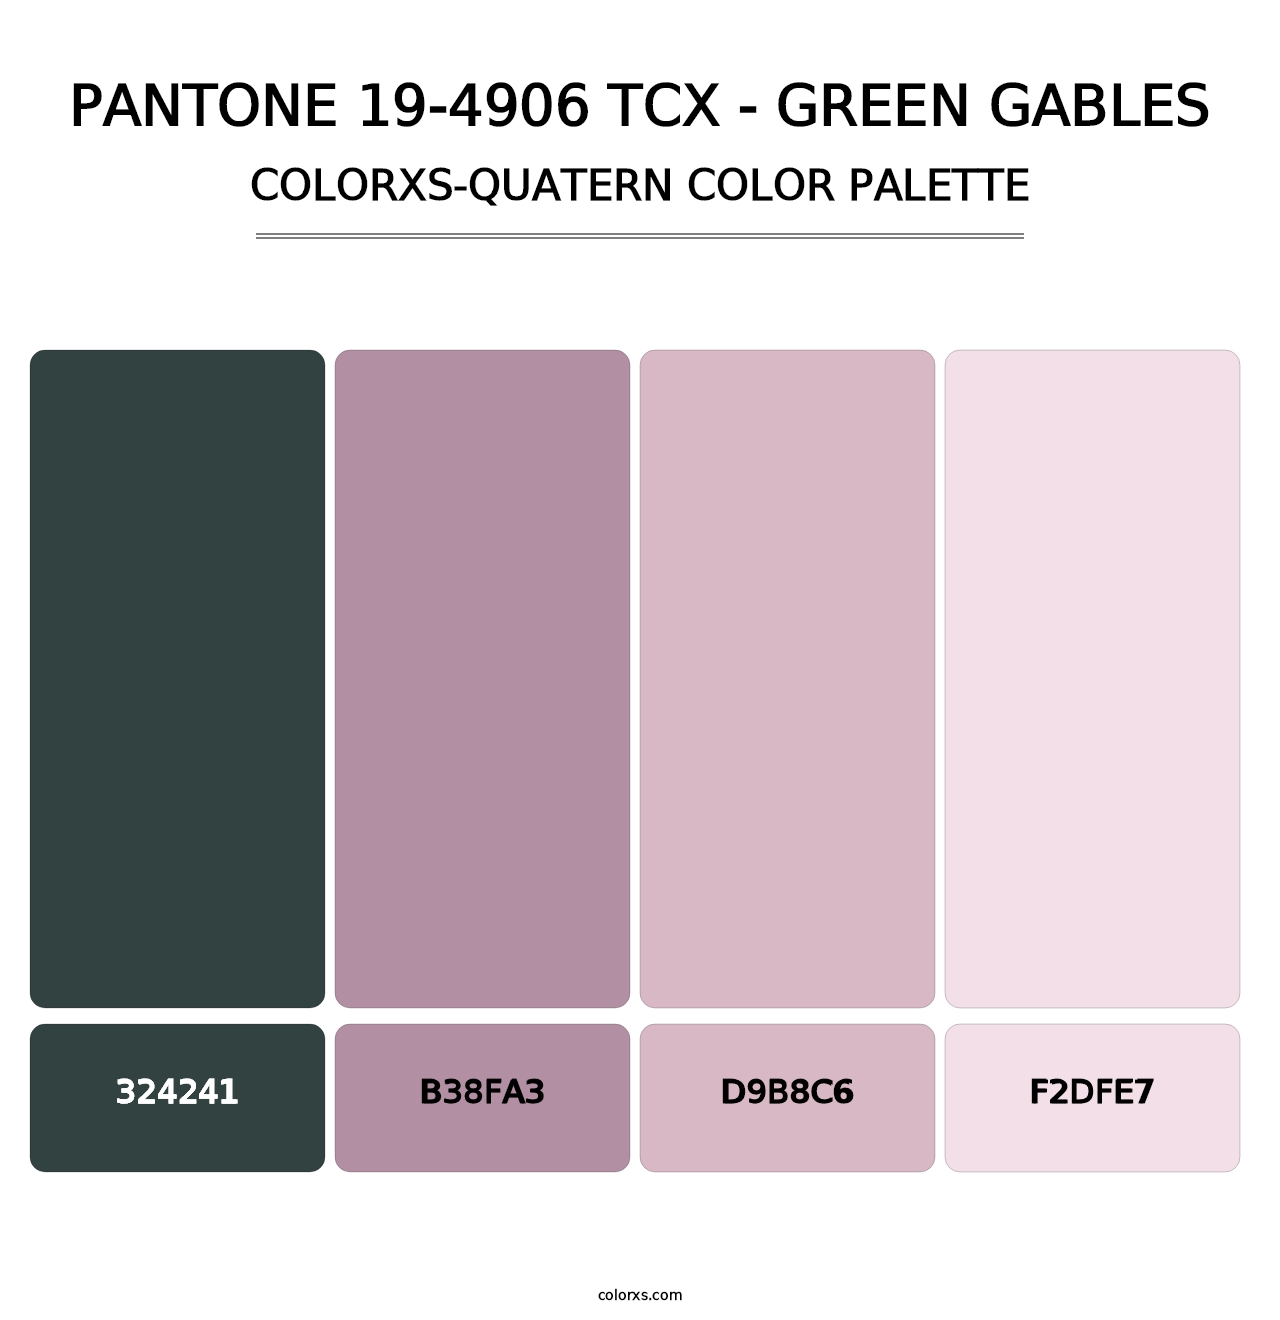 PANTONE 19-4906 TCX - Green Gables - Colorxs Quatern Palette